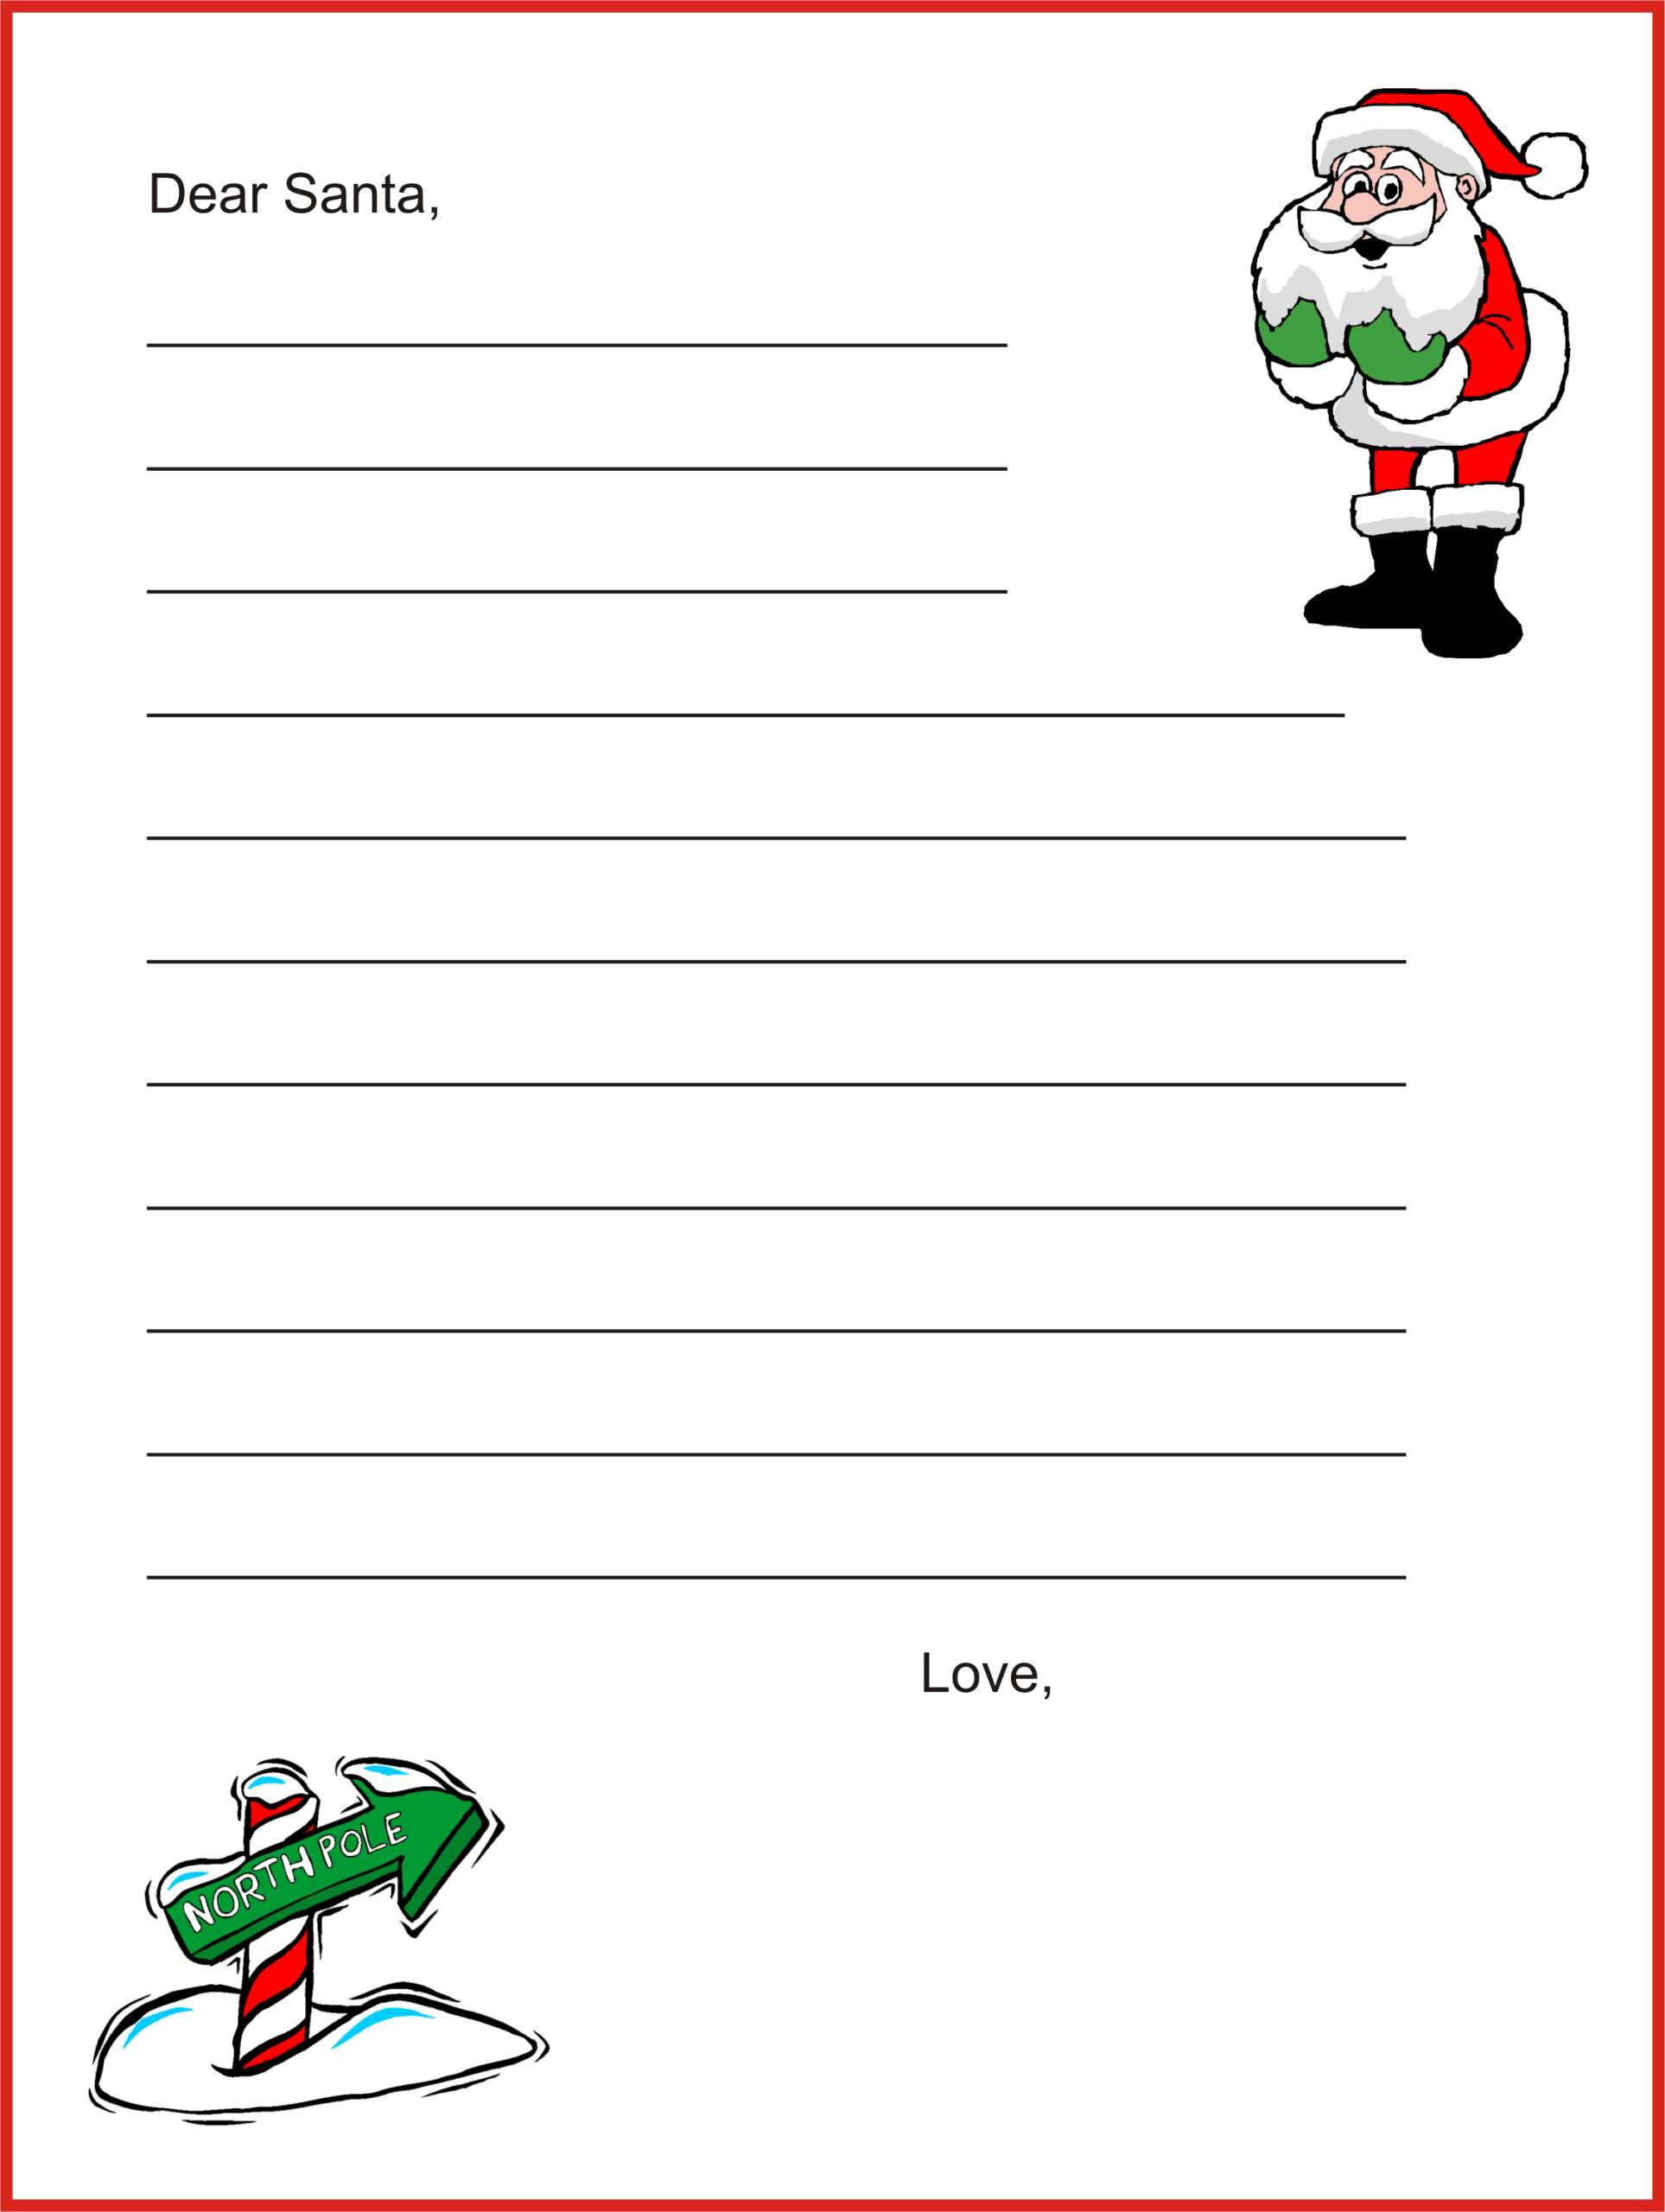 Dear Santa Letter | With Dear Santa Letter Template Free